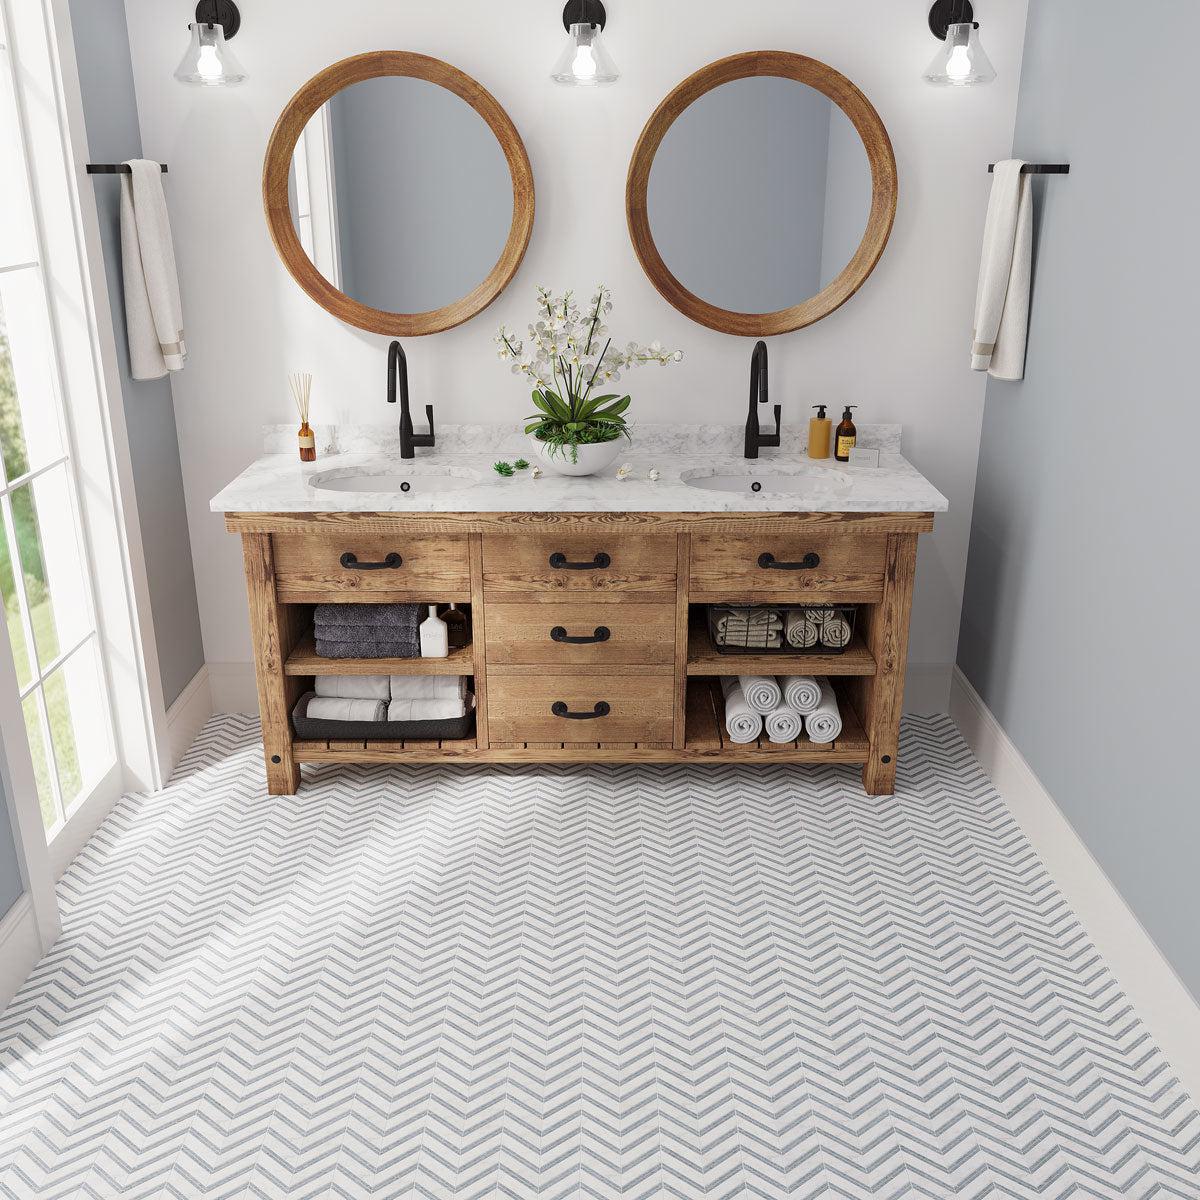 Modern organic bathroom design with a chevron patterned bathroom floor